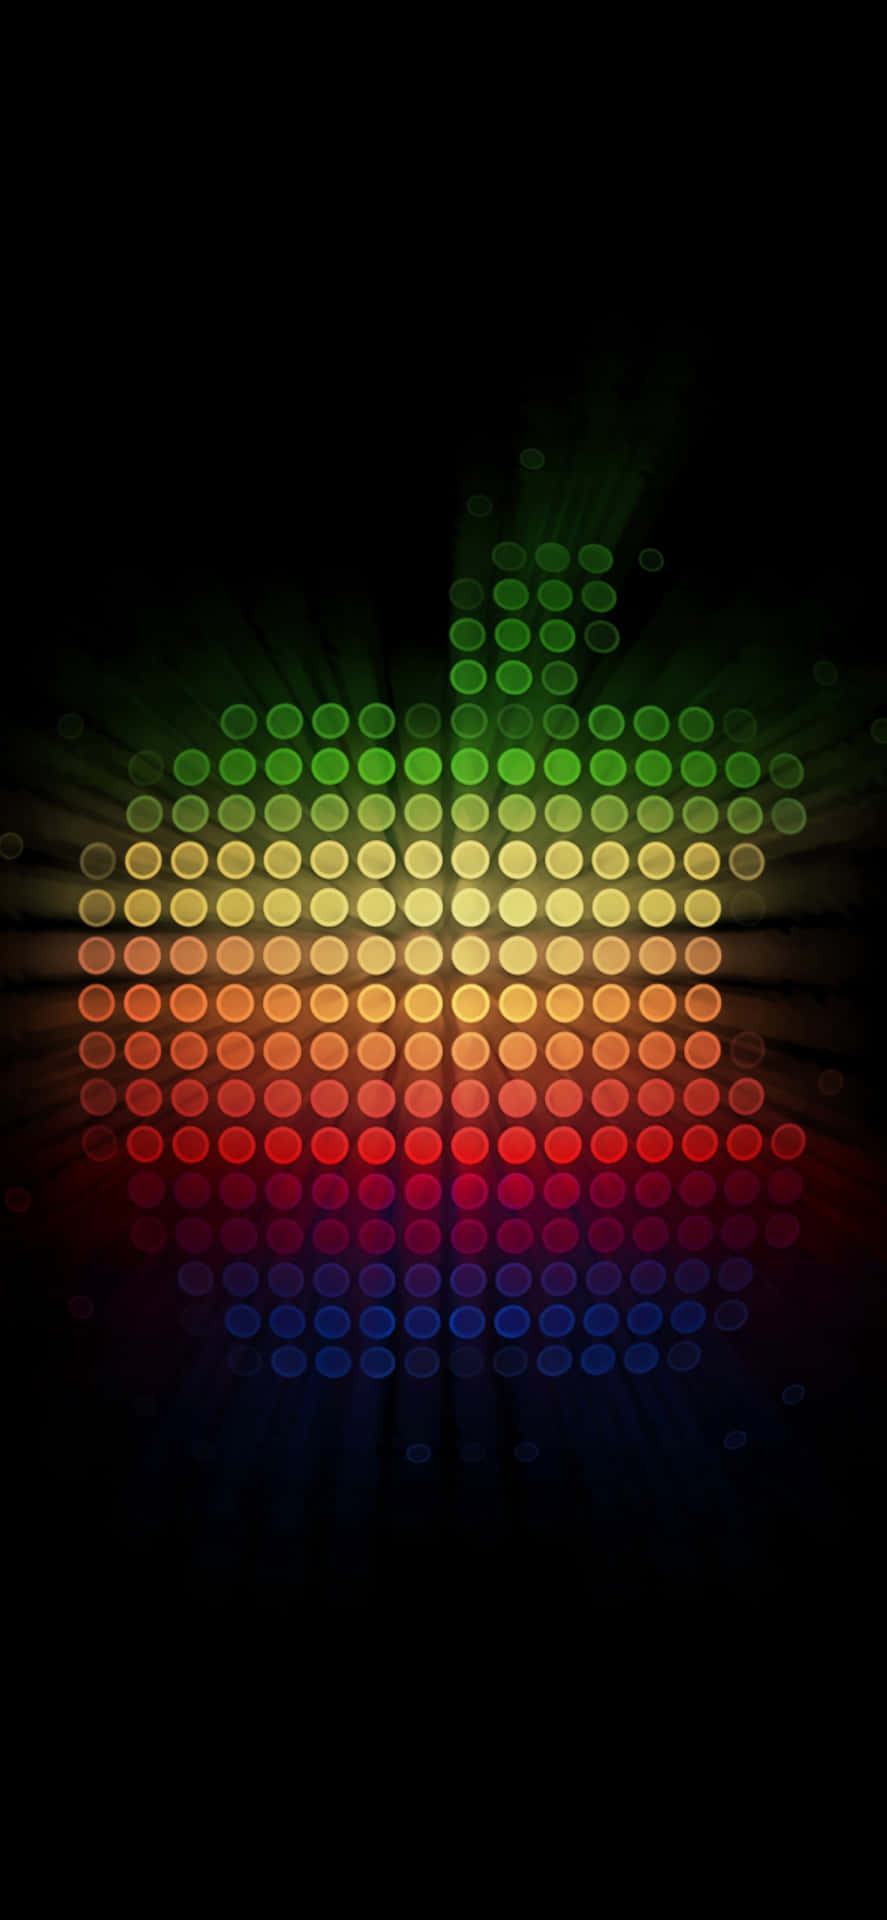 Retro Inspiration – Classic Apple Logo Wallpaper